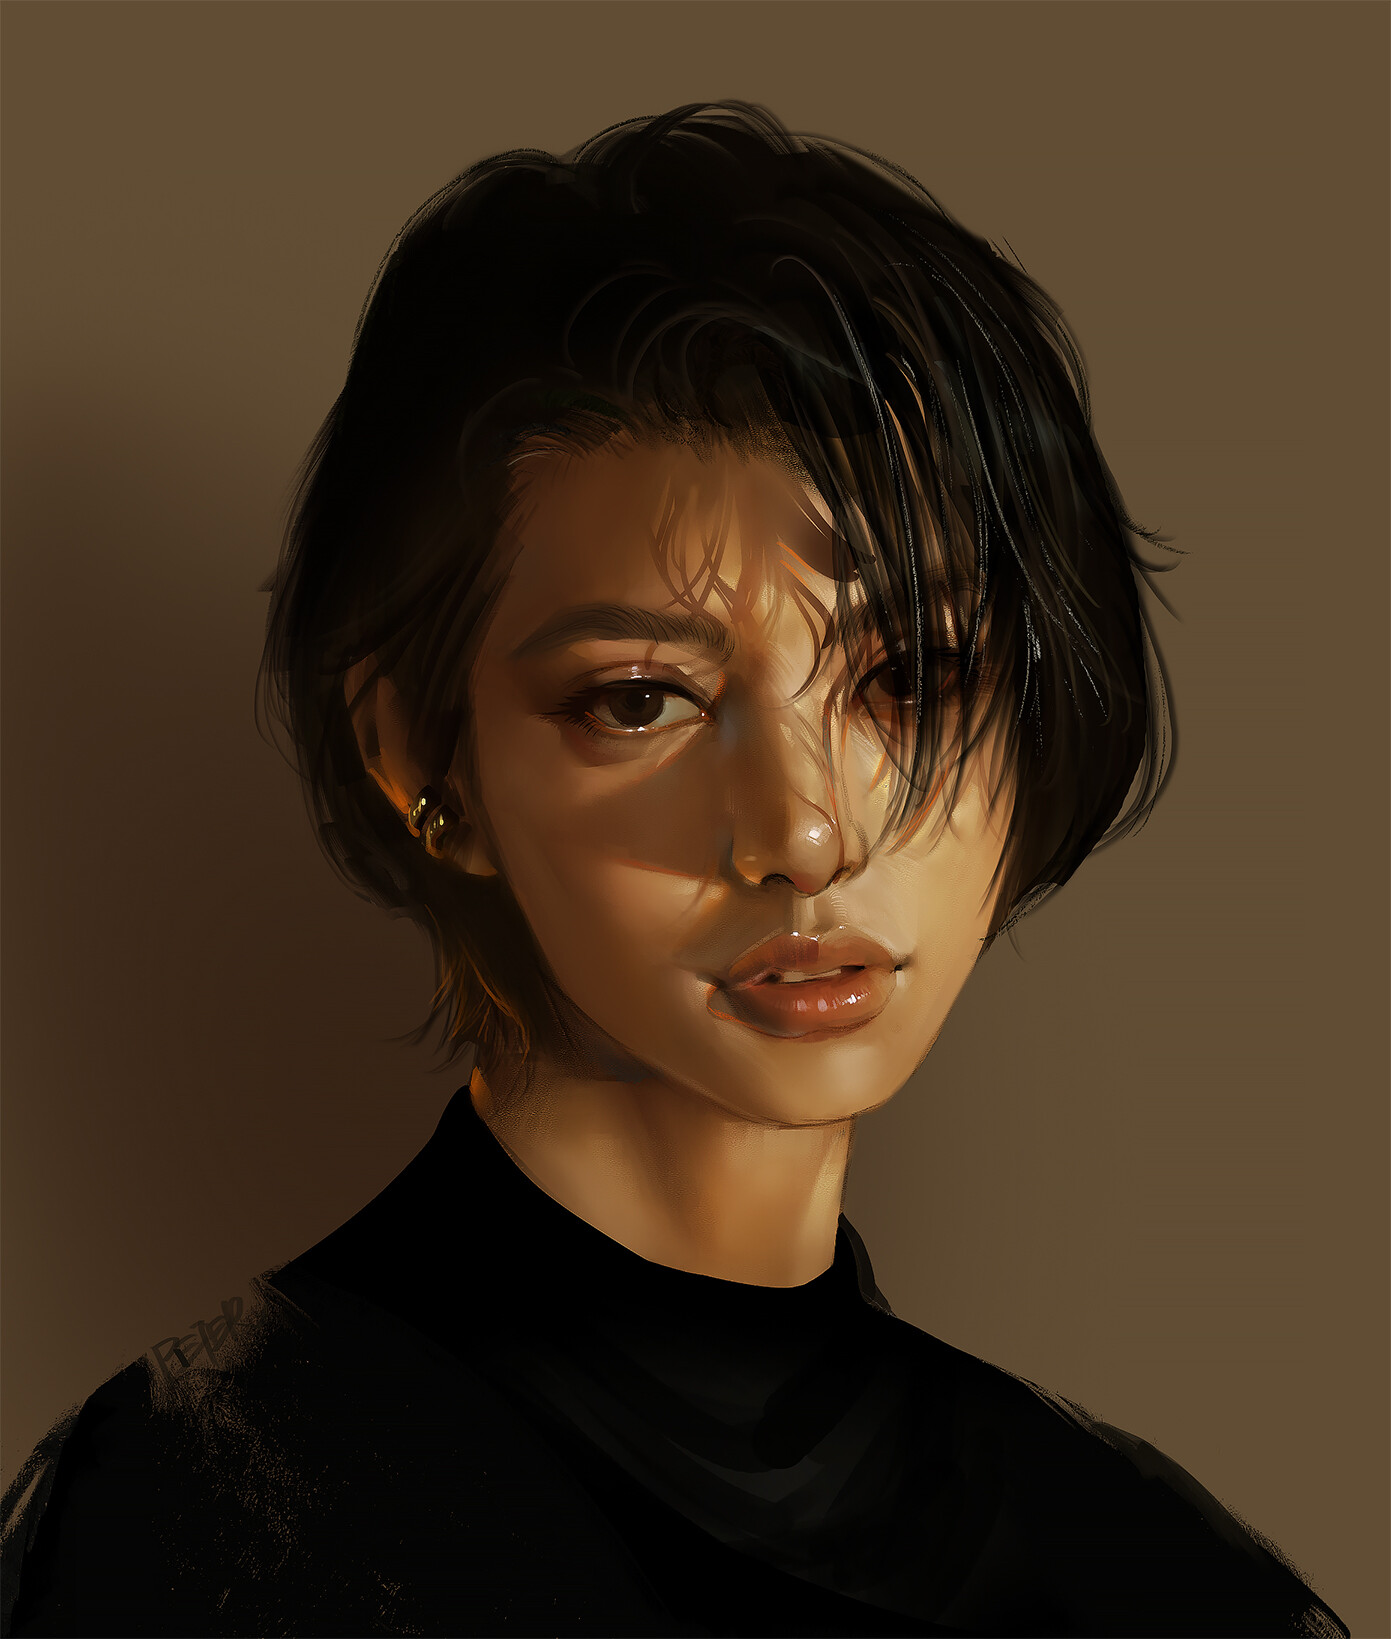 Peter Xiao Digital Digital Art Artwork Drawing Women Looking At Viewer Portrait Short Hair Black Hai 1391x1639